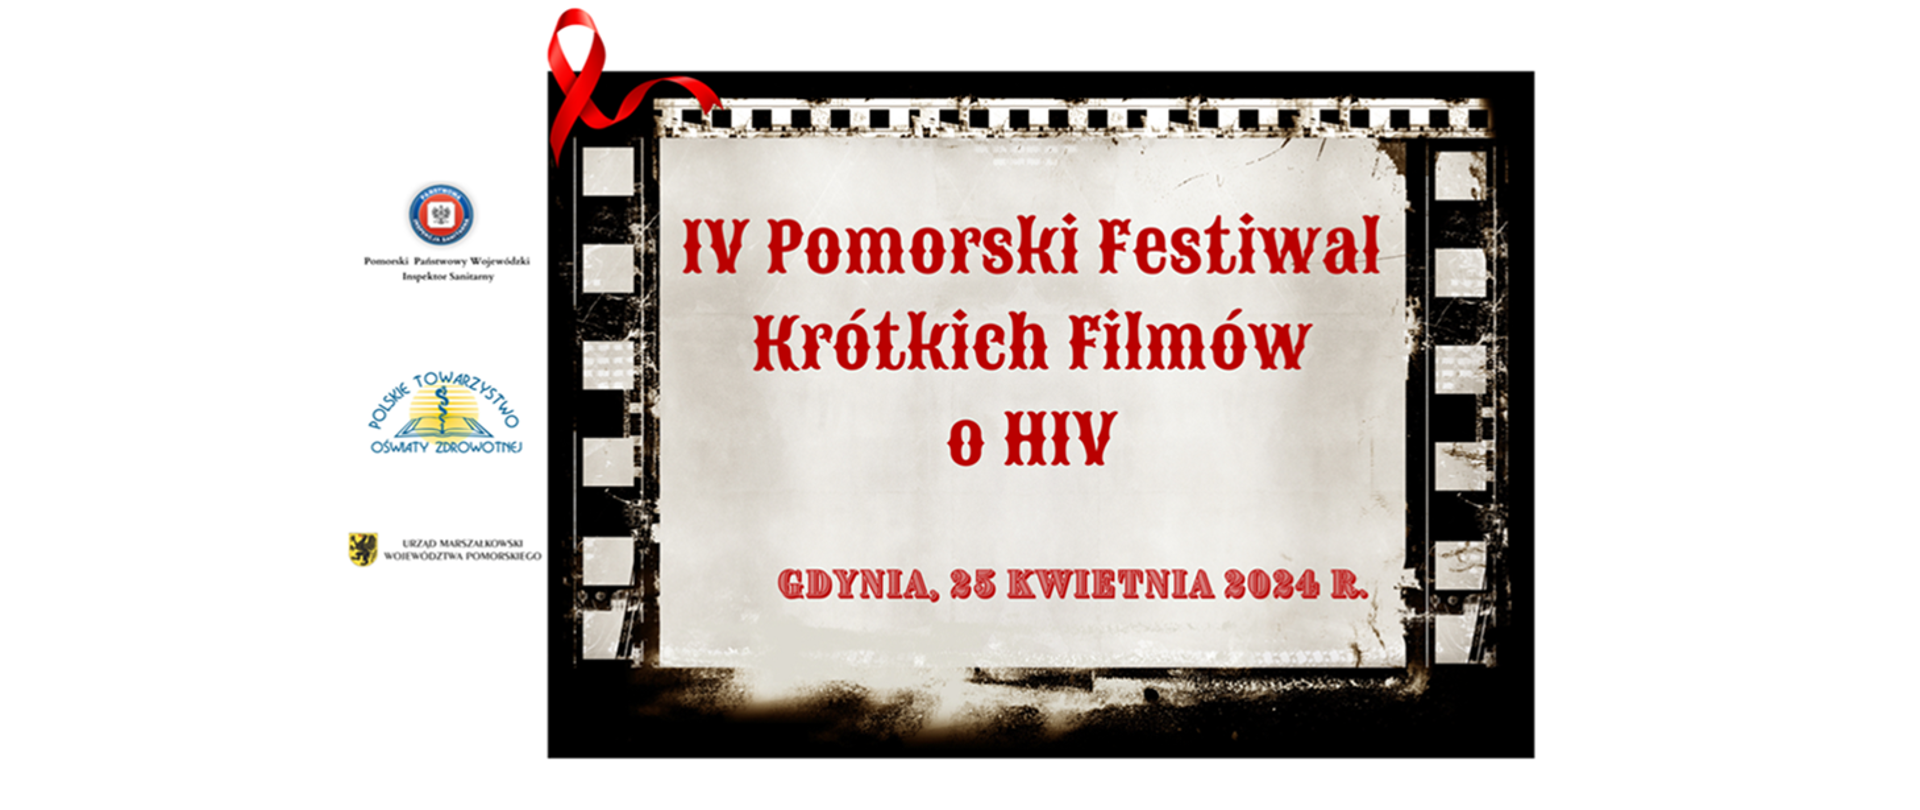 rolka filmowa z napisem IV pomorski festiwal krótkich filmów o hiv